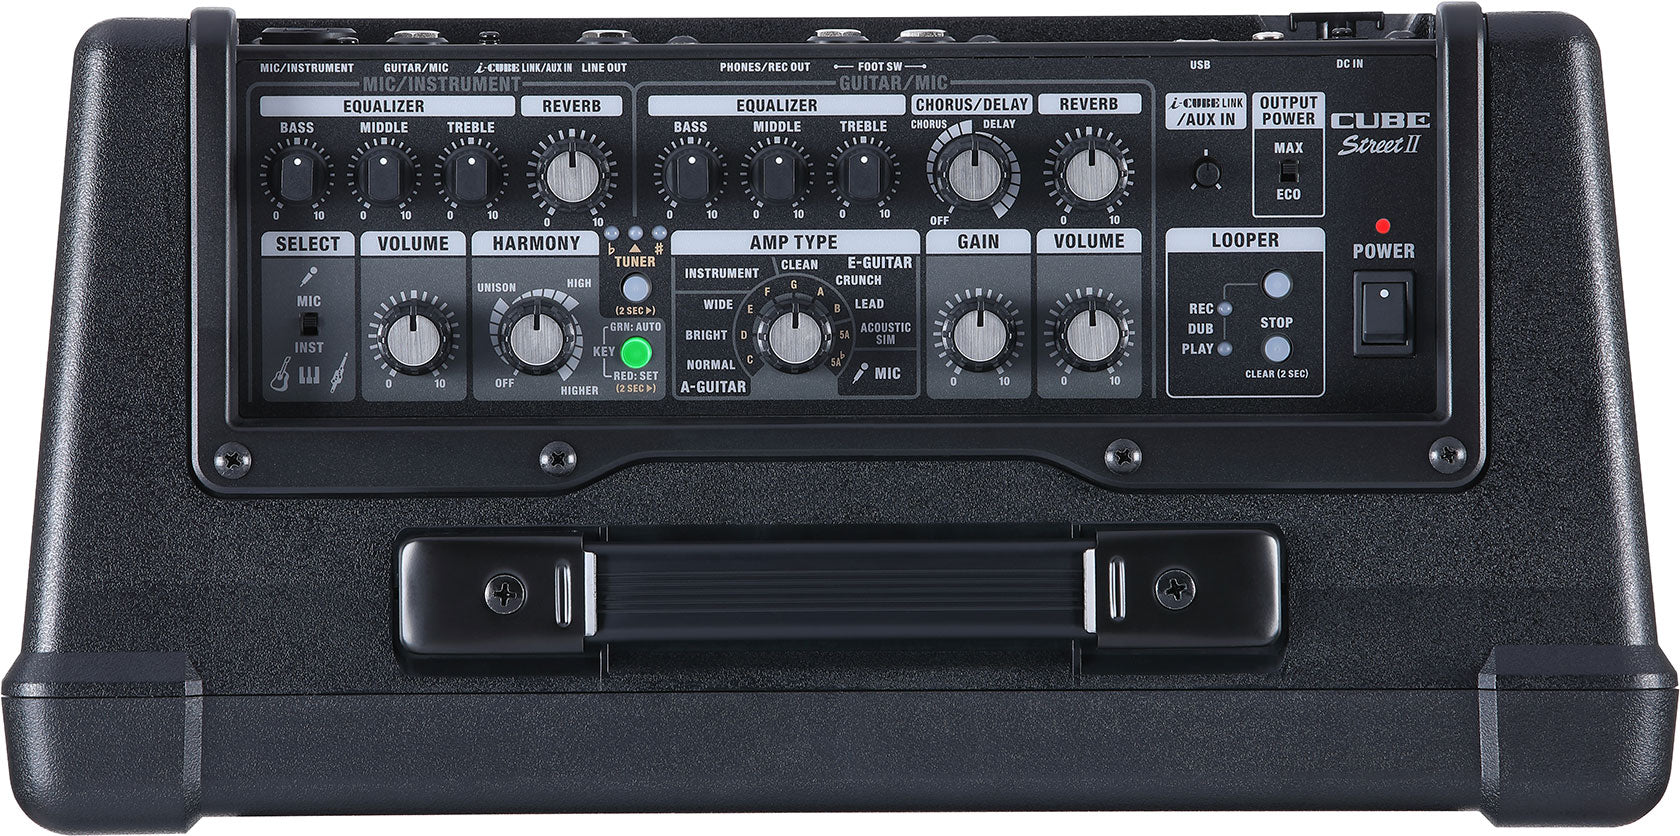 BOSS CUBE Street II Battery-Powered Stereo Amplifier - Black - A